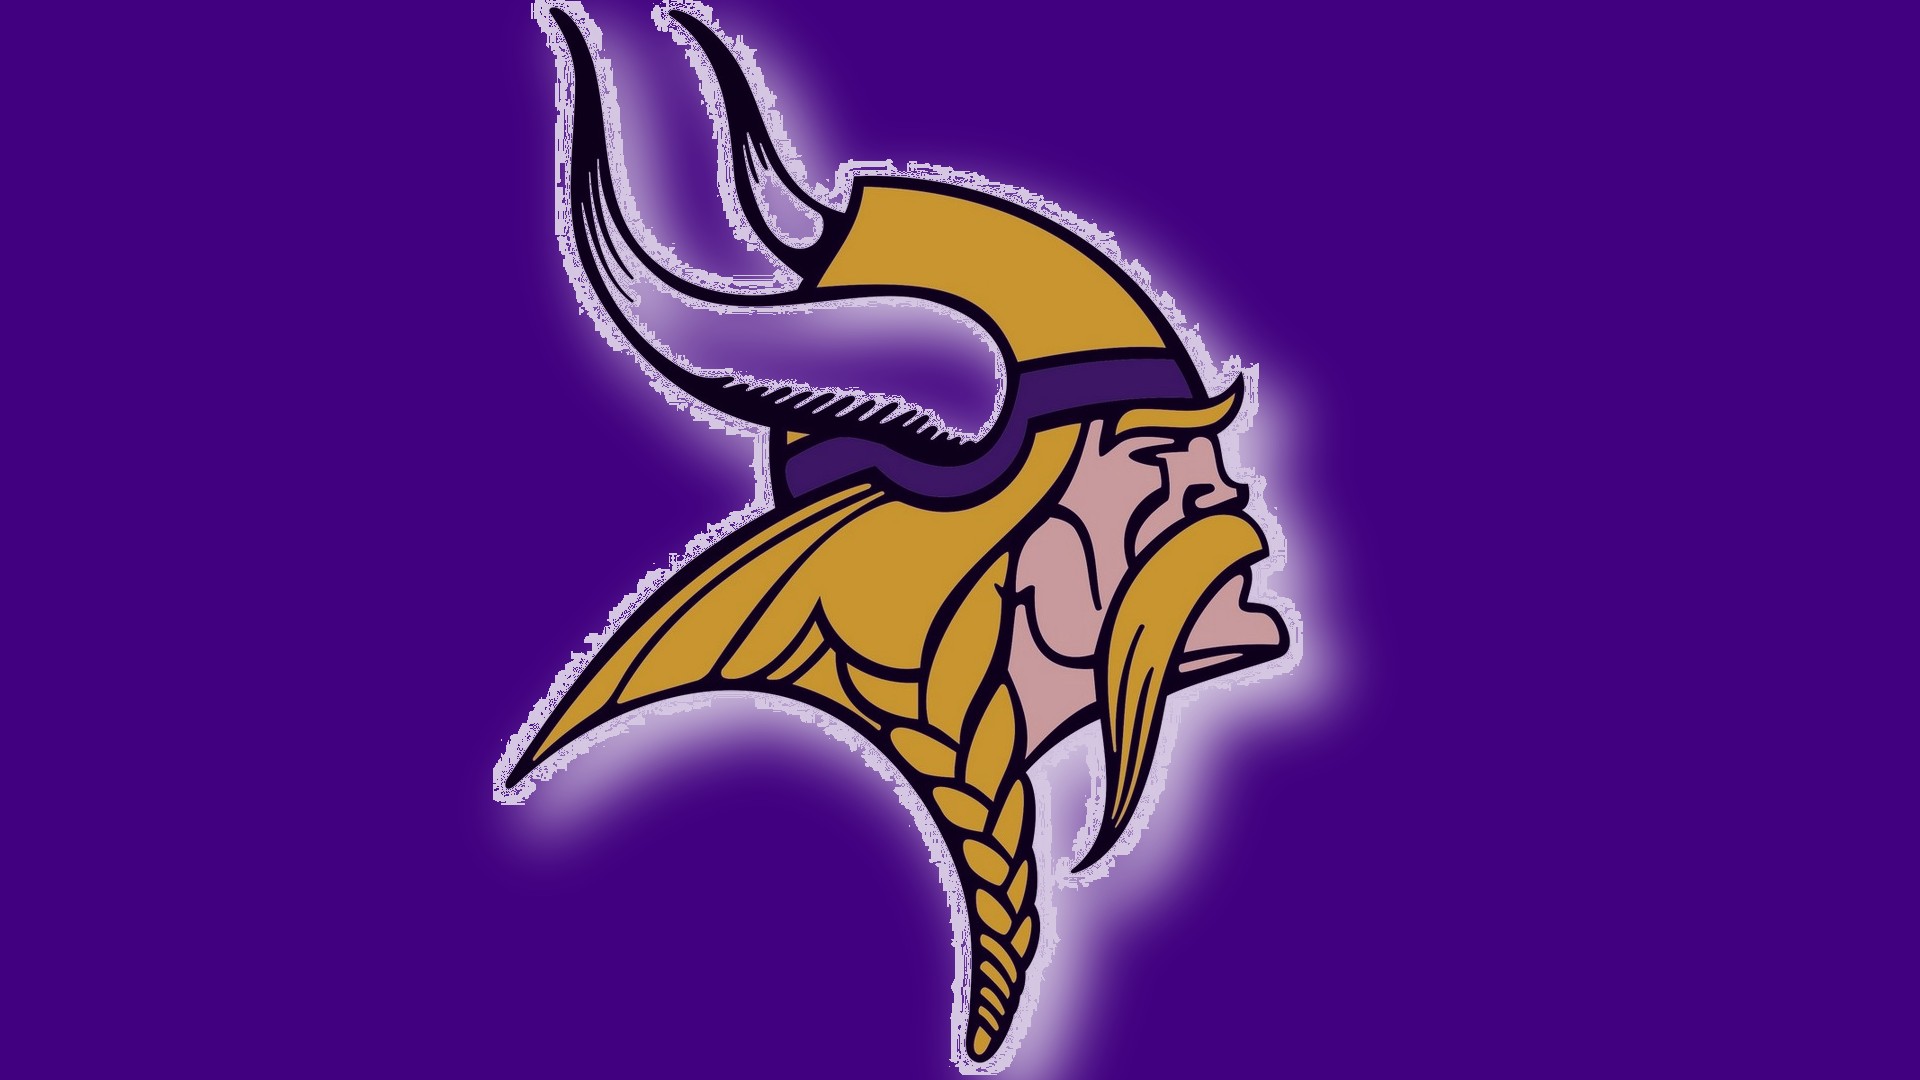 Nfl Minnesota Vikings Logo Pictures To Pin